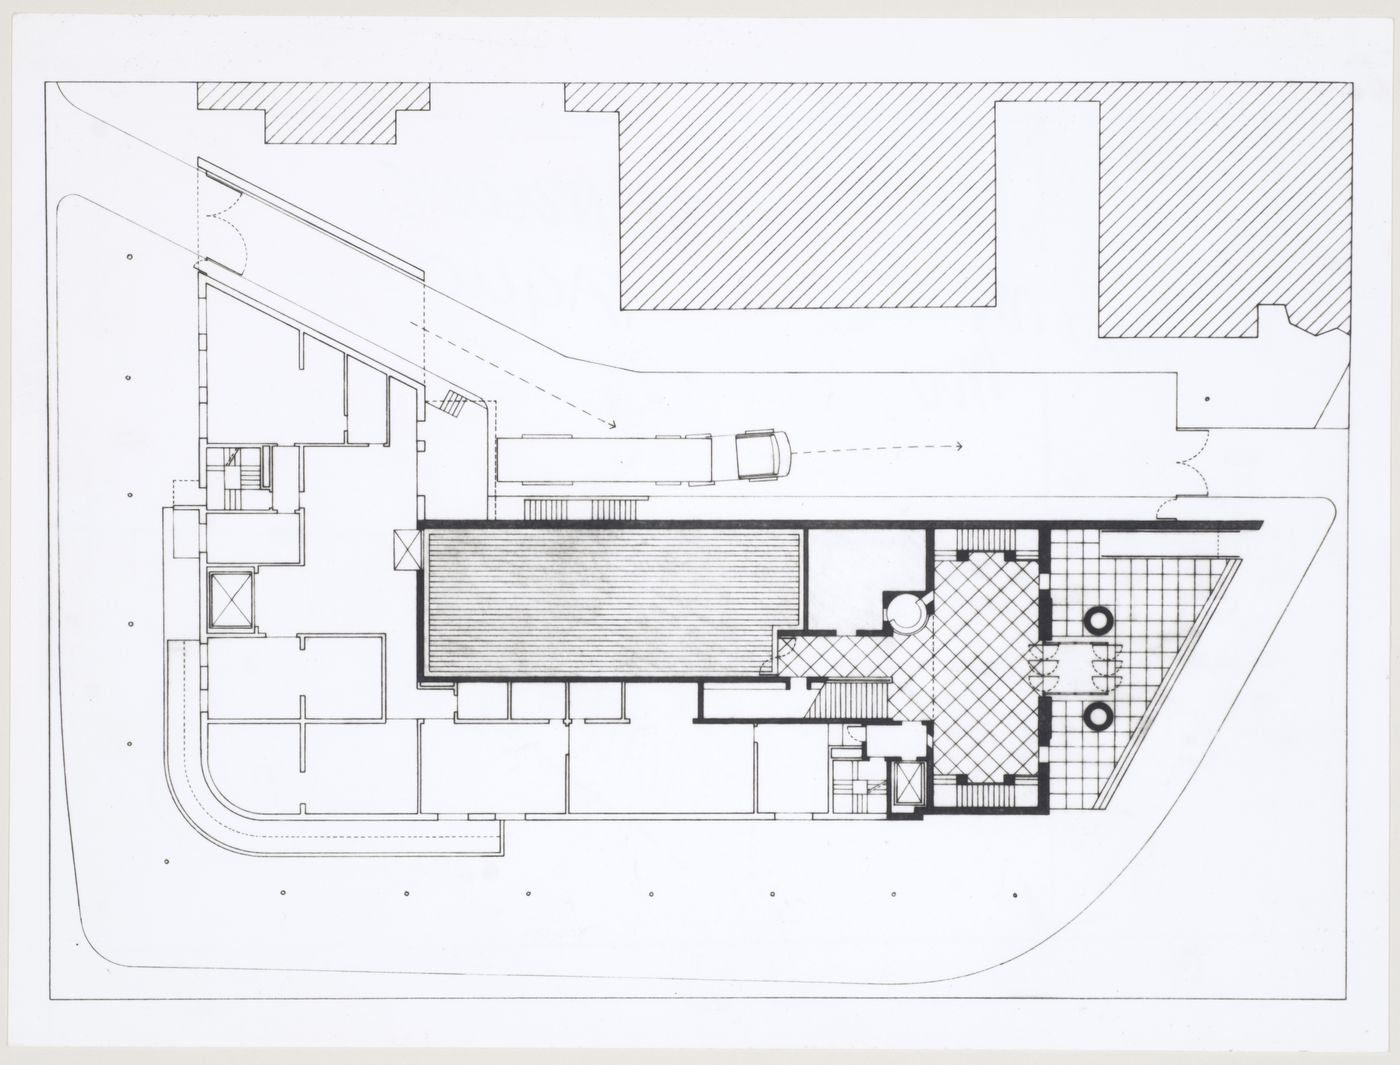 Arthur M. Sackler Museum, Harvard University, Cambridge, Massachusetts: view of plan